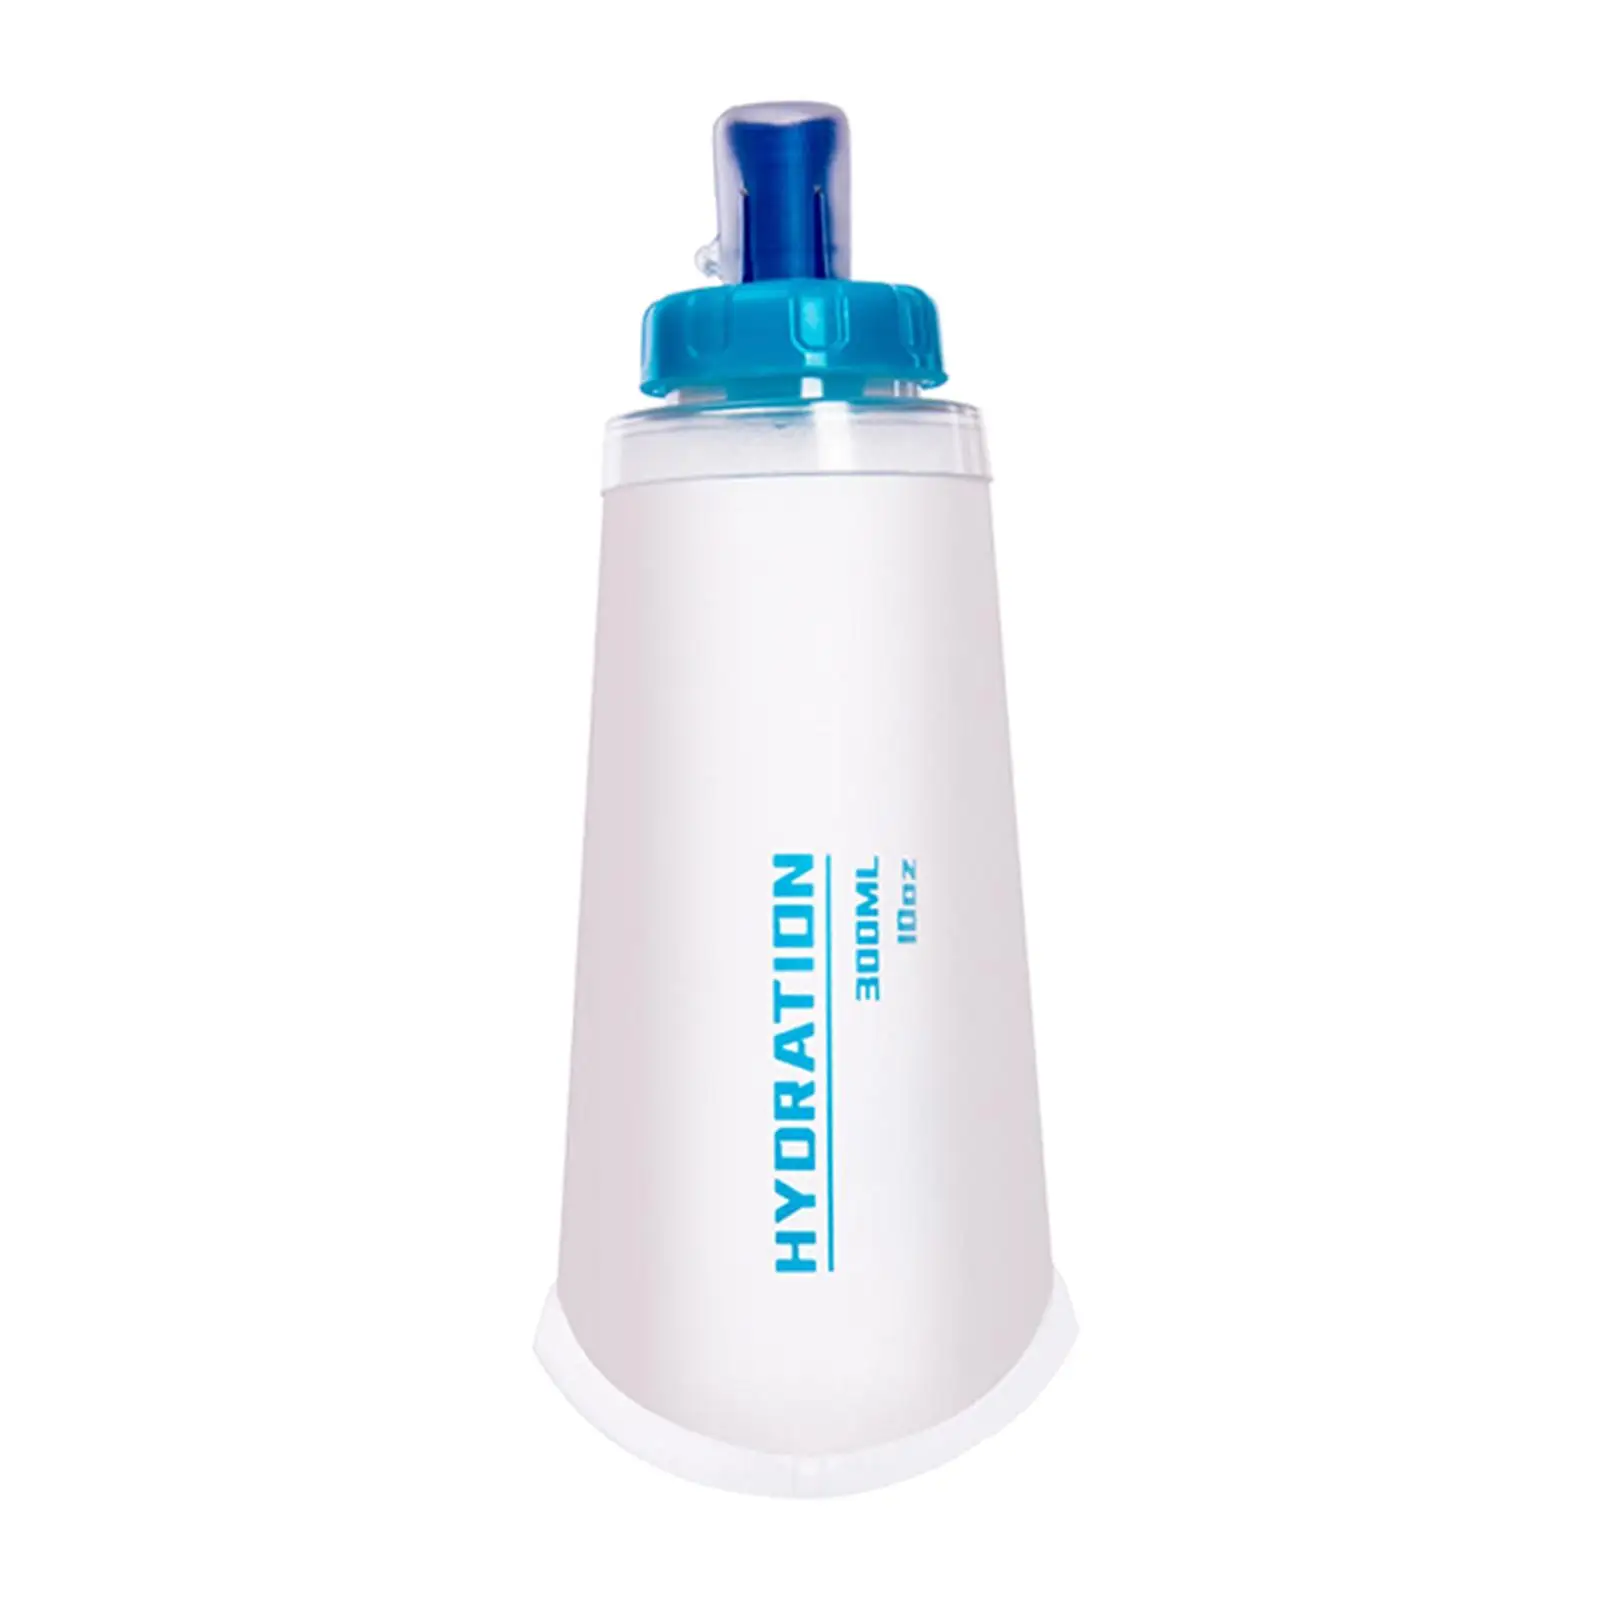 Folding Reusable TPU Soft Water Bag Sports Water Bottle Fitness Workout